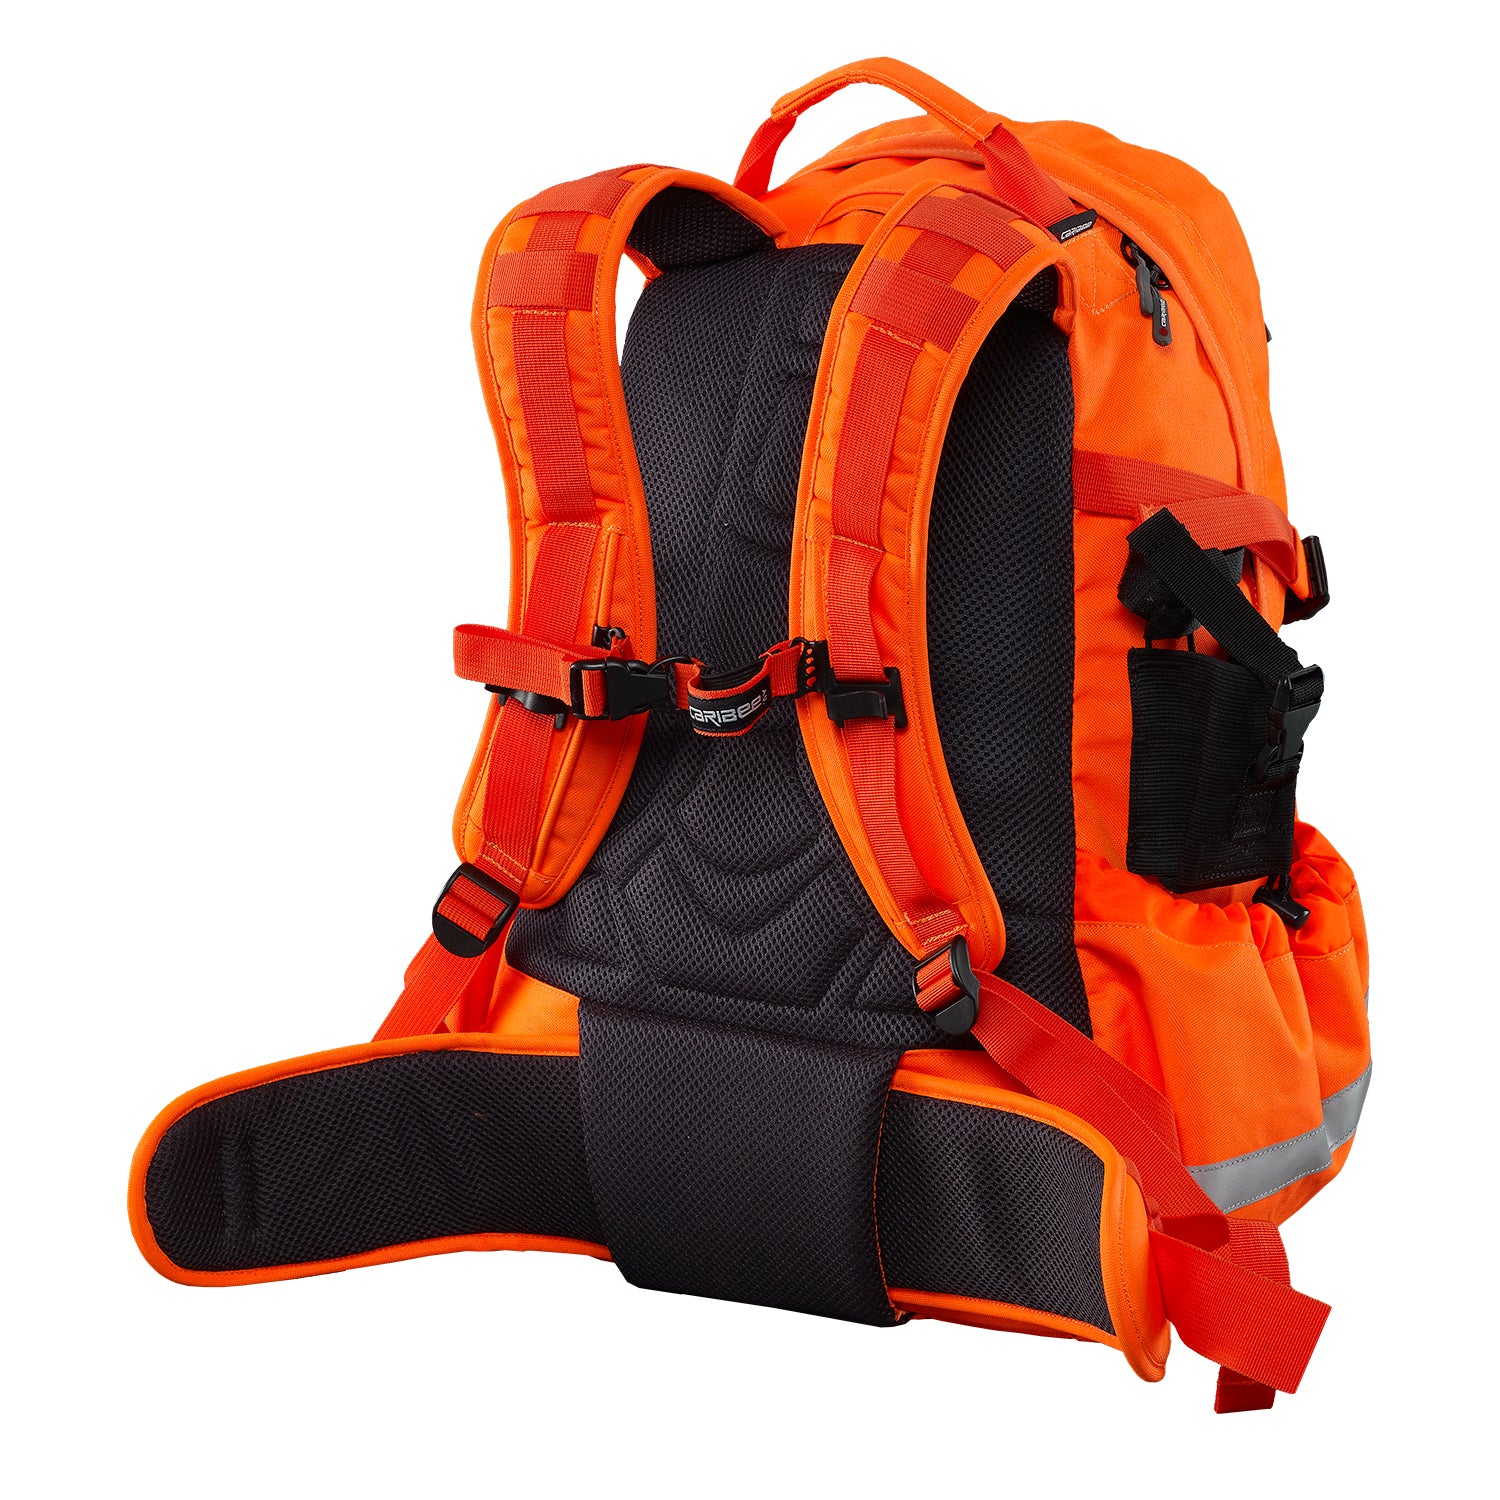 Caribee Mineral King 32L high visibility orange backpack harness